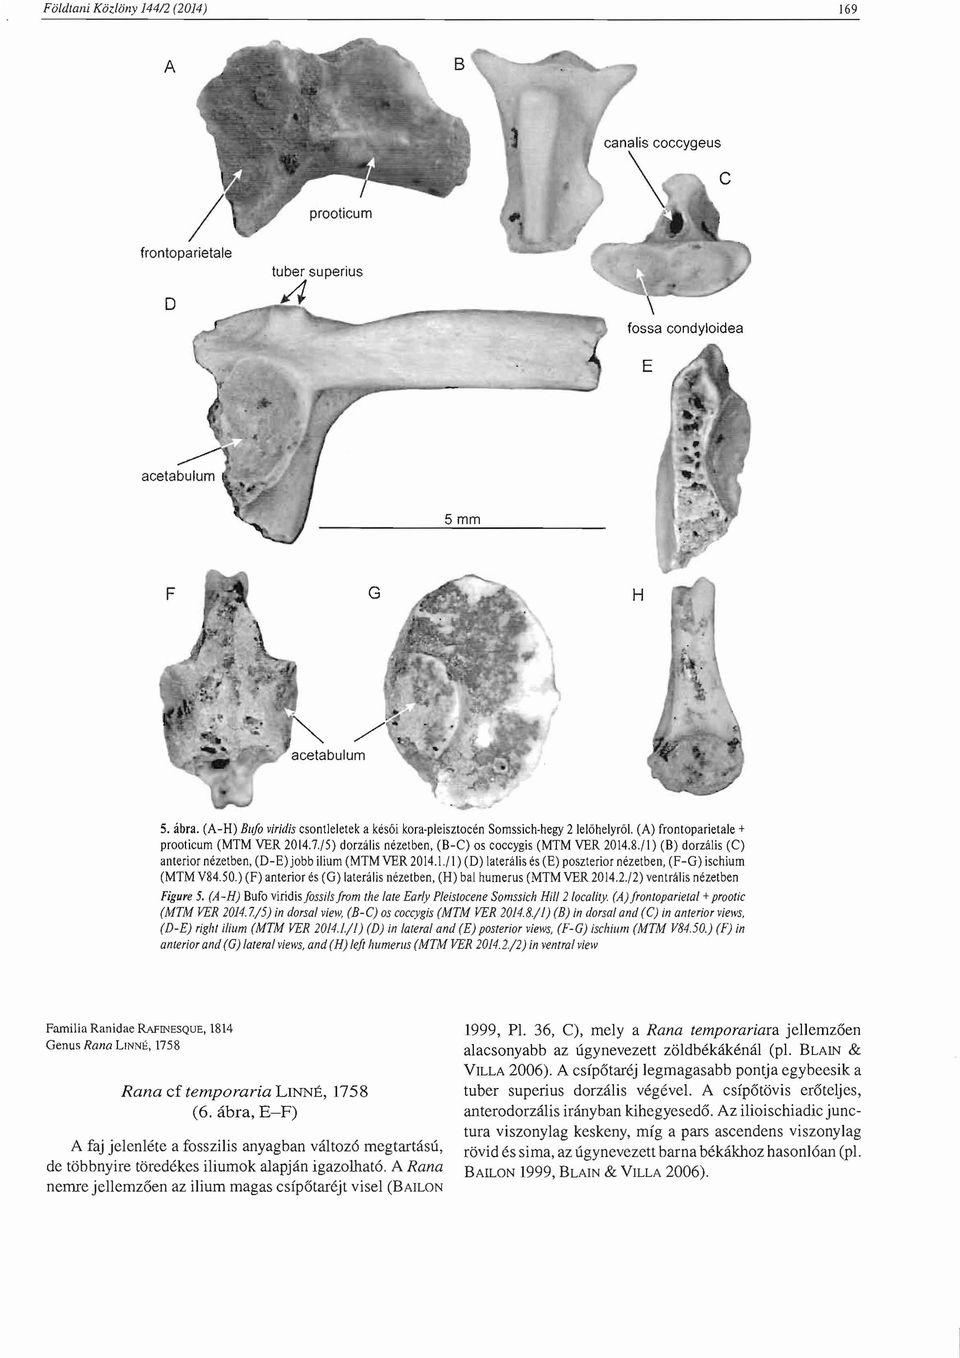 50.) (F) anterior es (G) laterillis nezetben, (H) bal humerus (MTM VER 2014.2./2) ventralis nezetben Figure 5. (A-H) Bufo viridisjossilsjrom the late Early Pleistocene Somssich Hil/210cality.